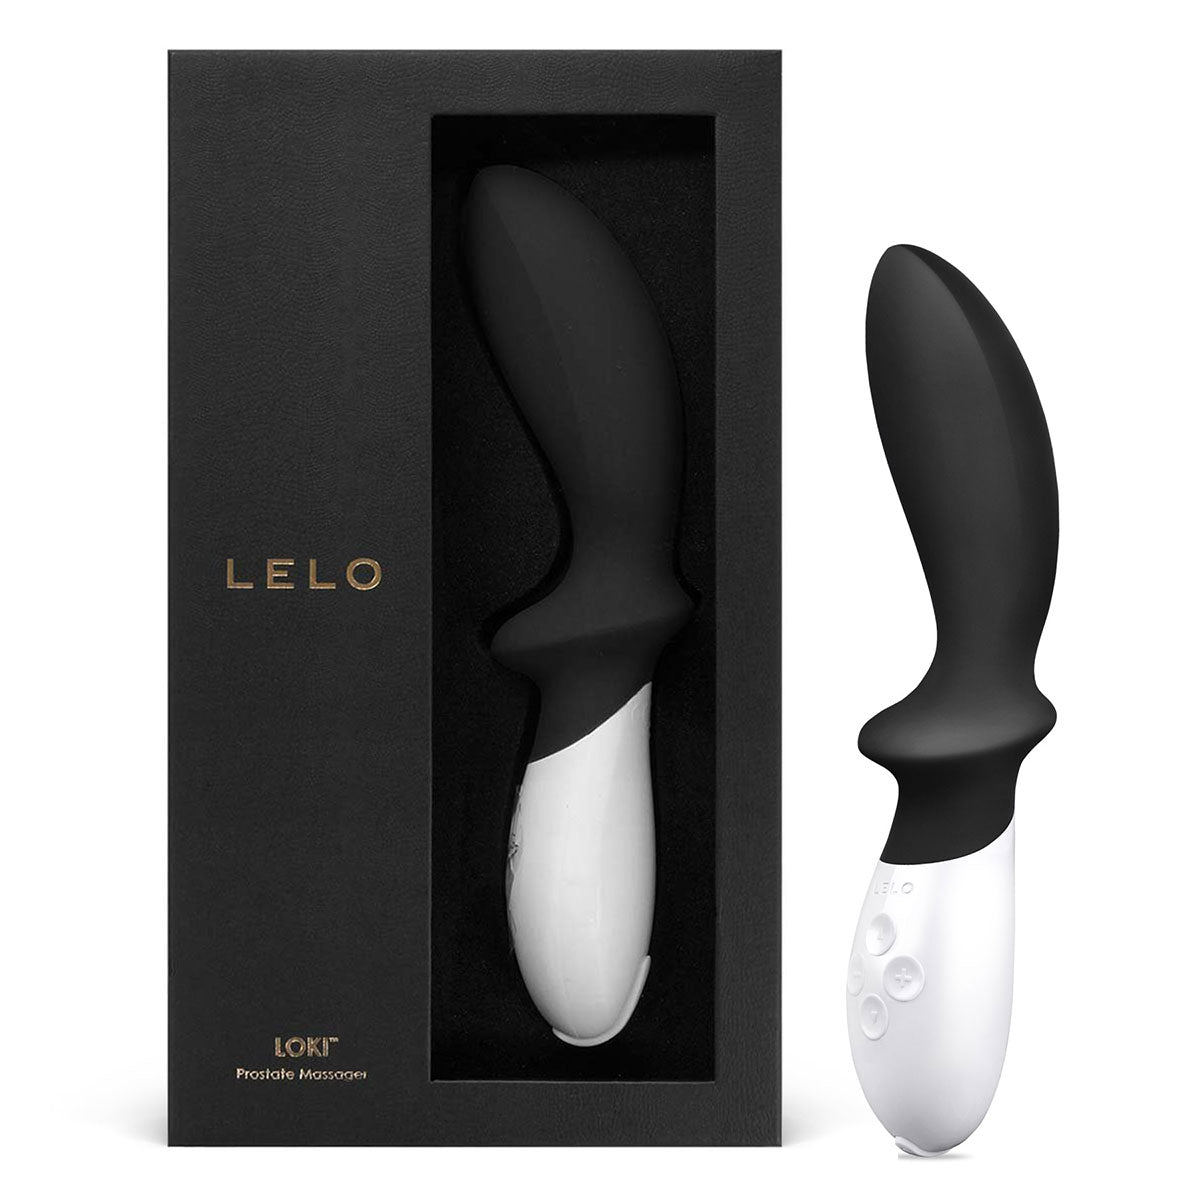 LELO Intimacy Devices LELO Loki - Obsidian Black